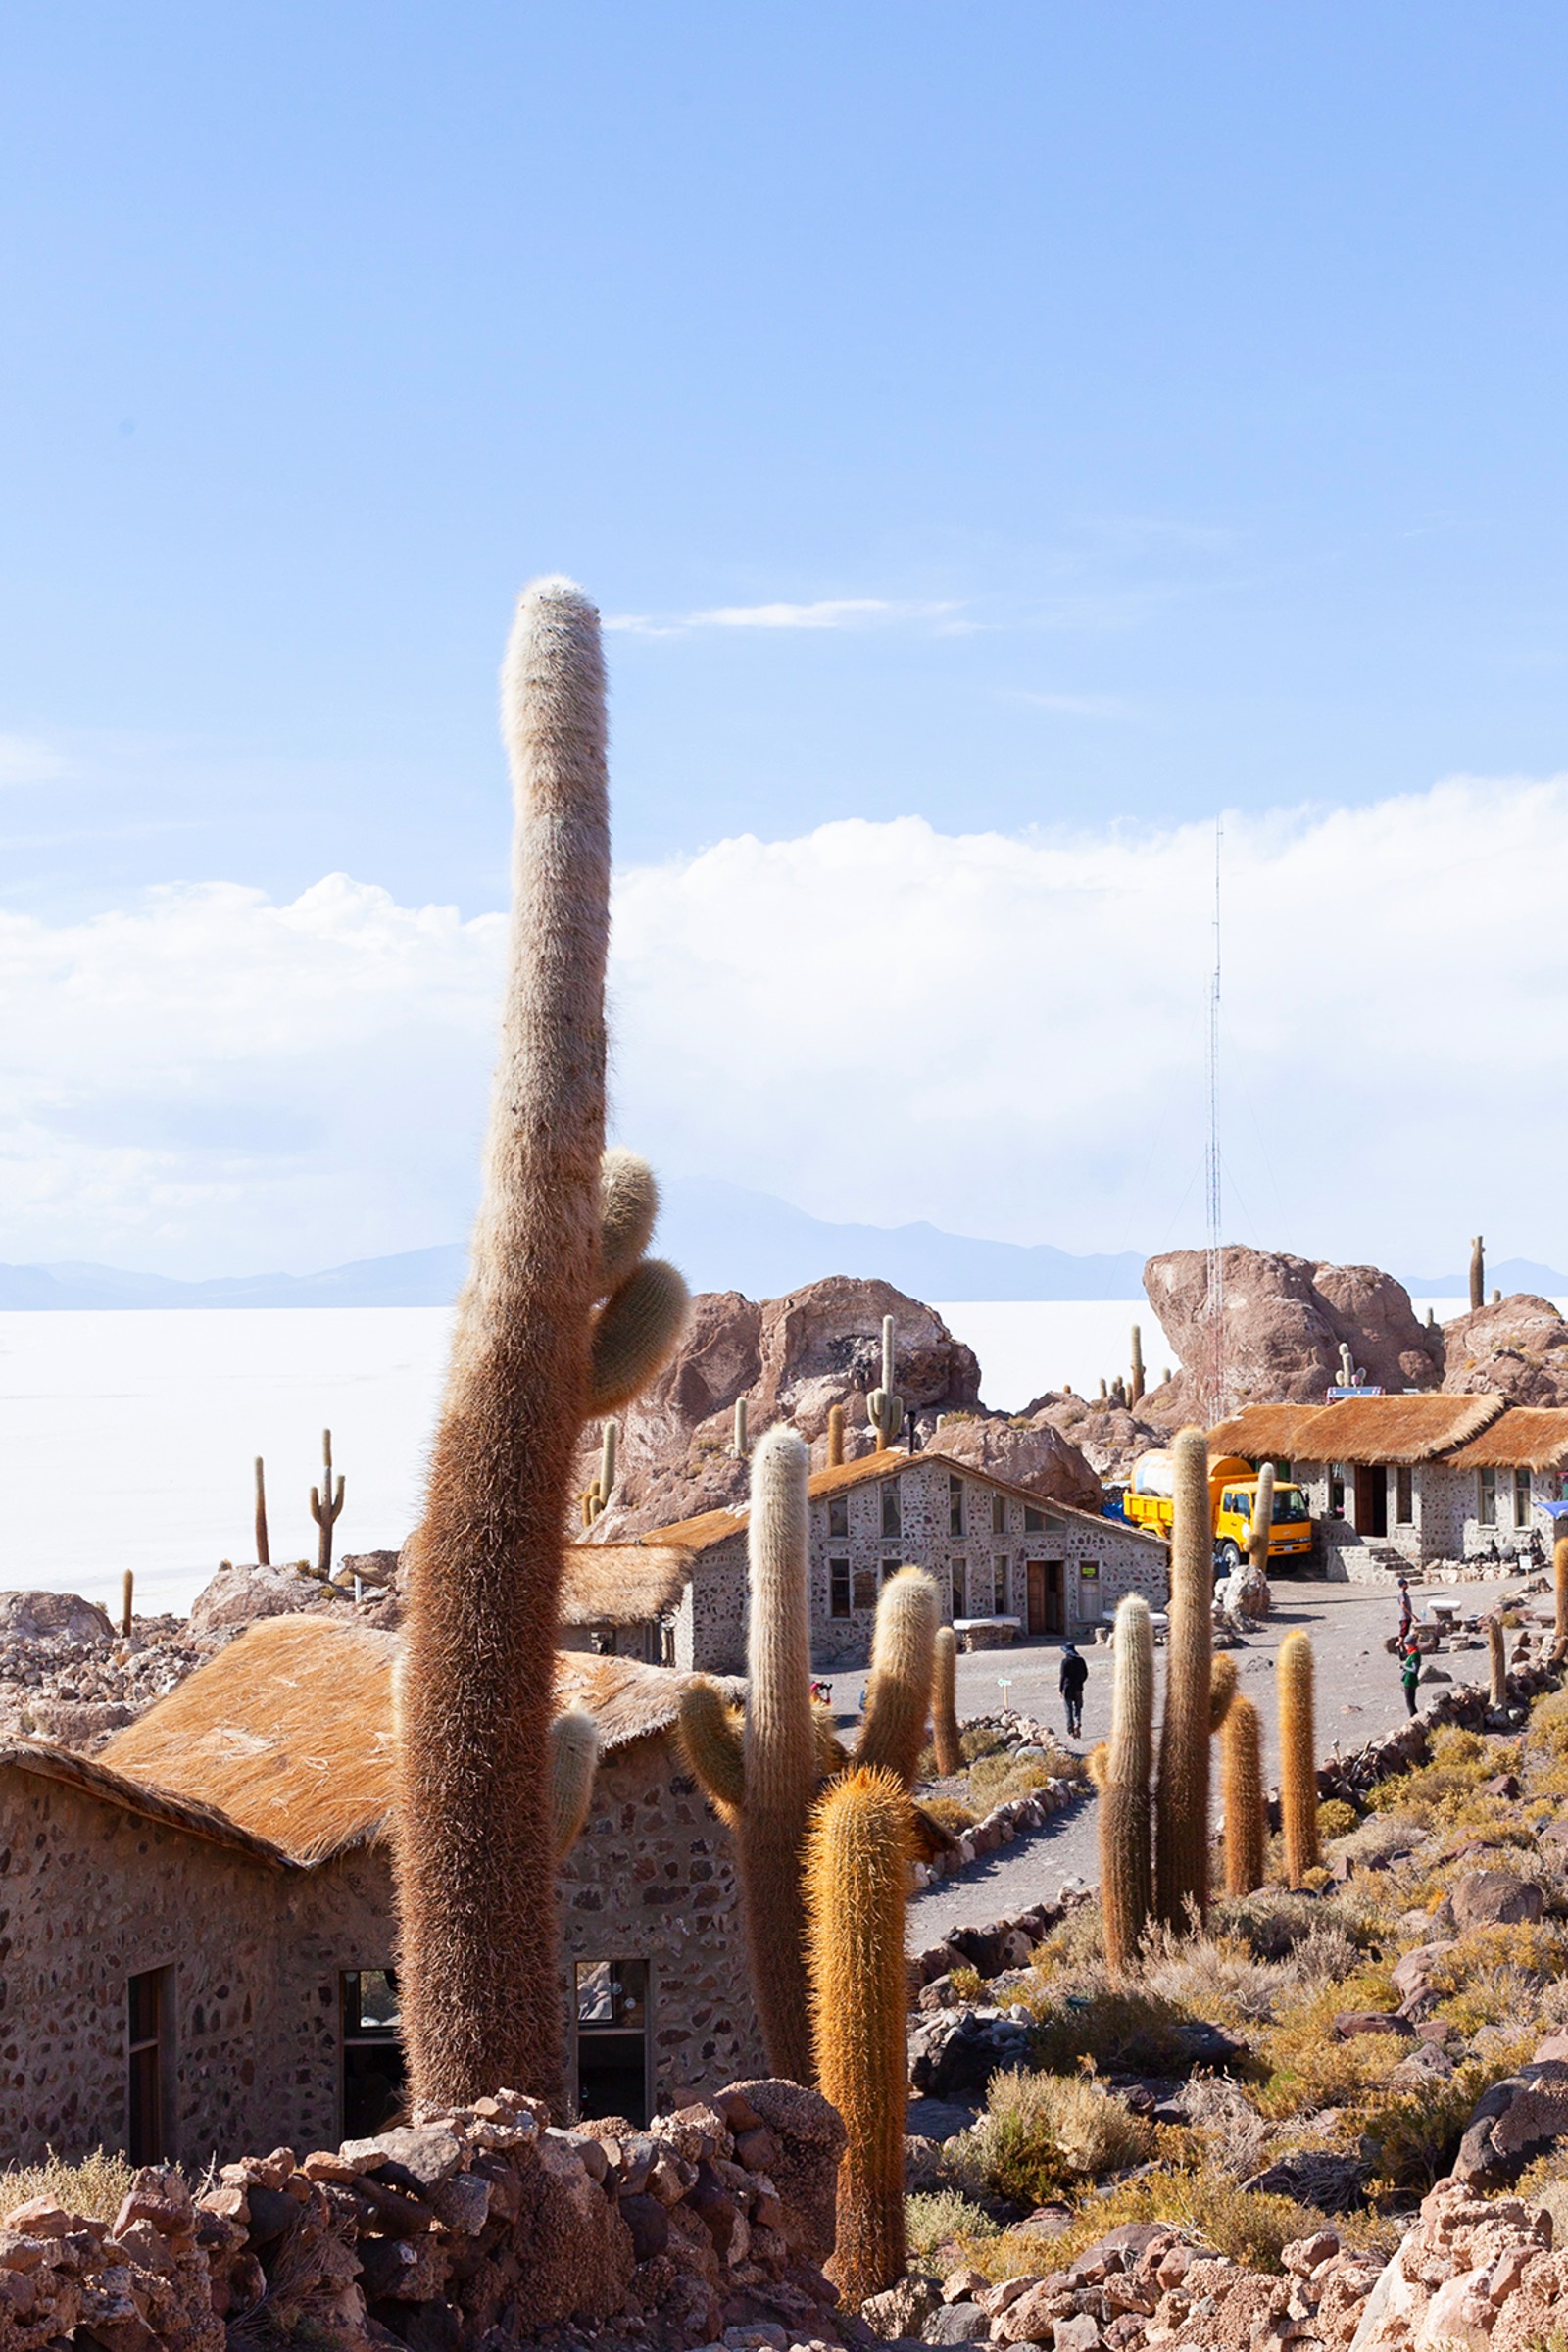 Incahuasi island, Uyuni salt-flat in Bolivia (Jimena Peck—Shutterstock)